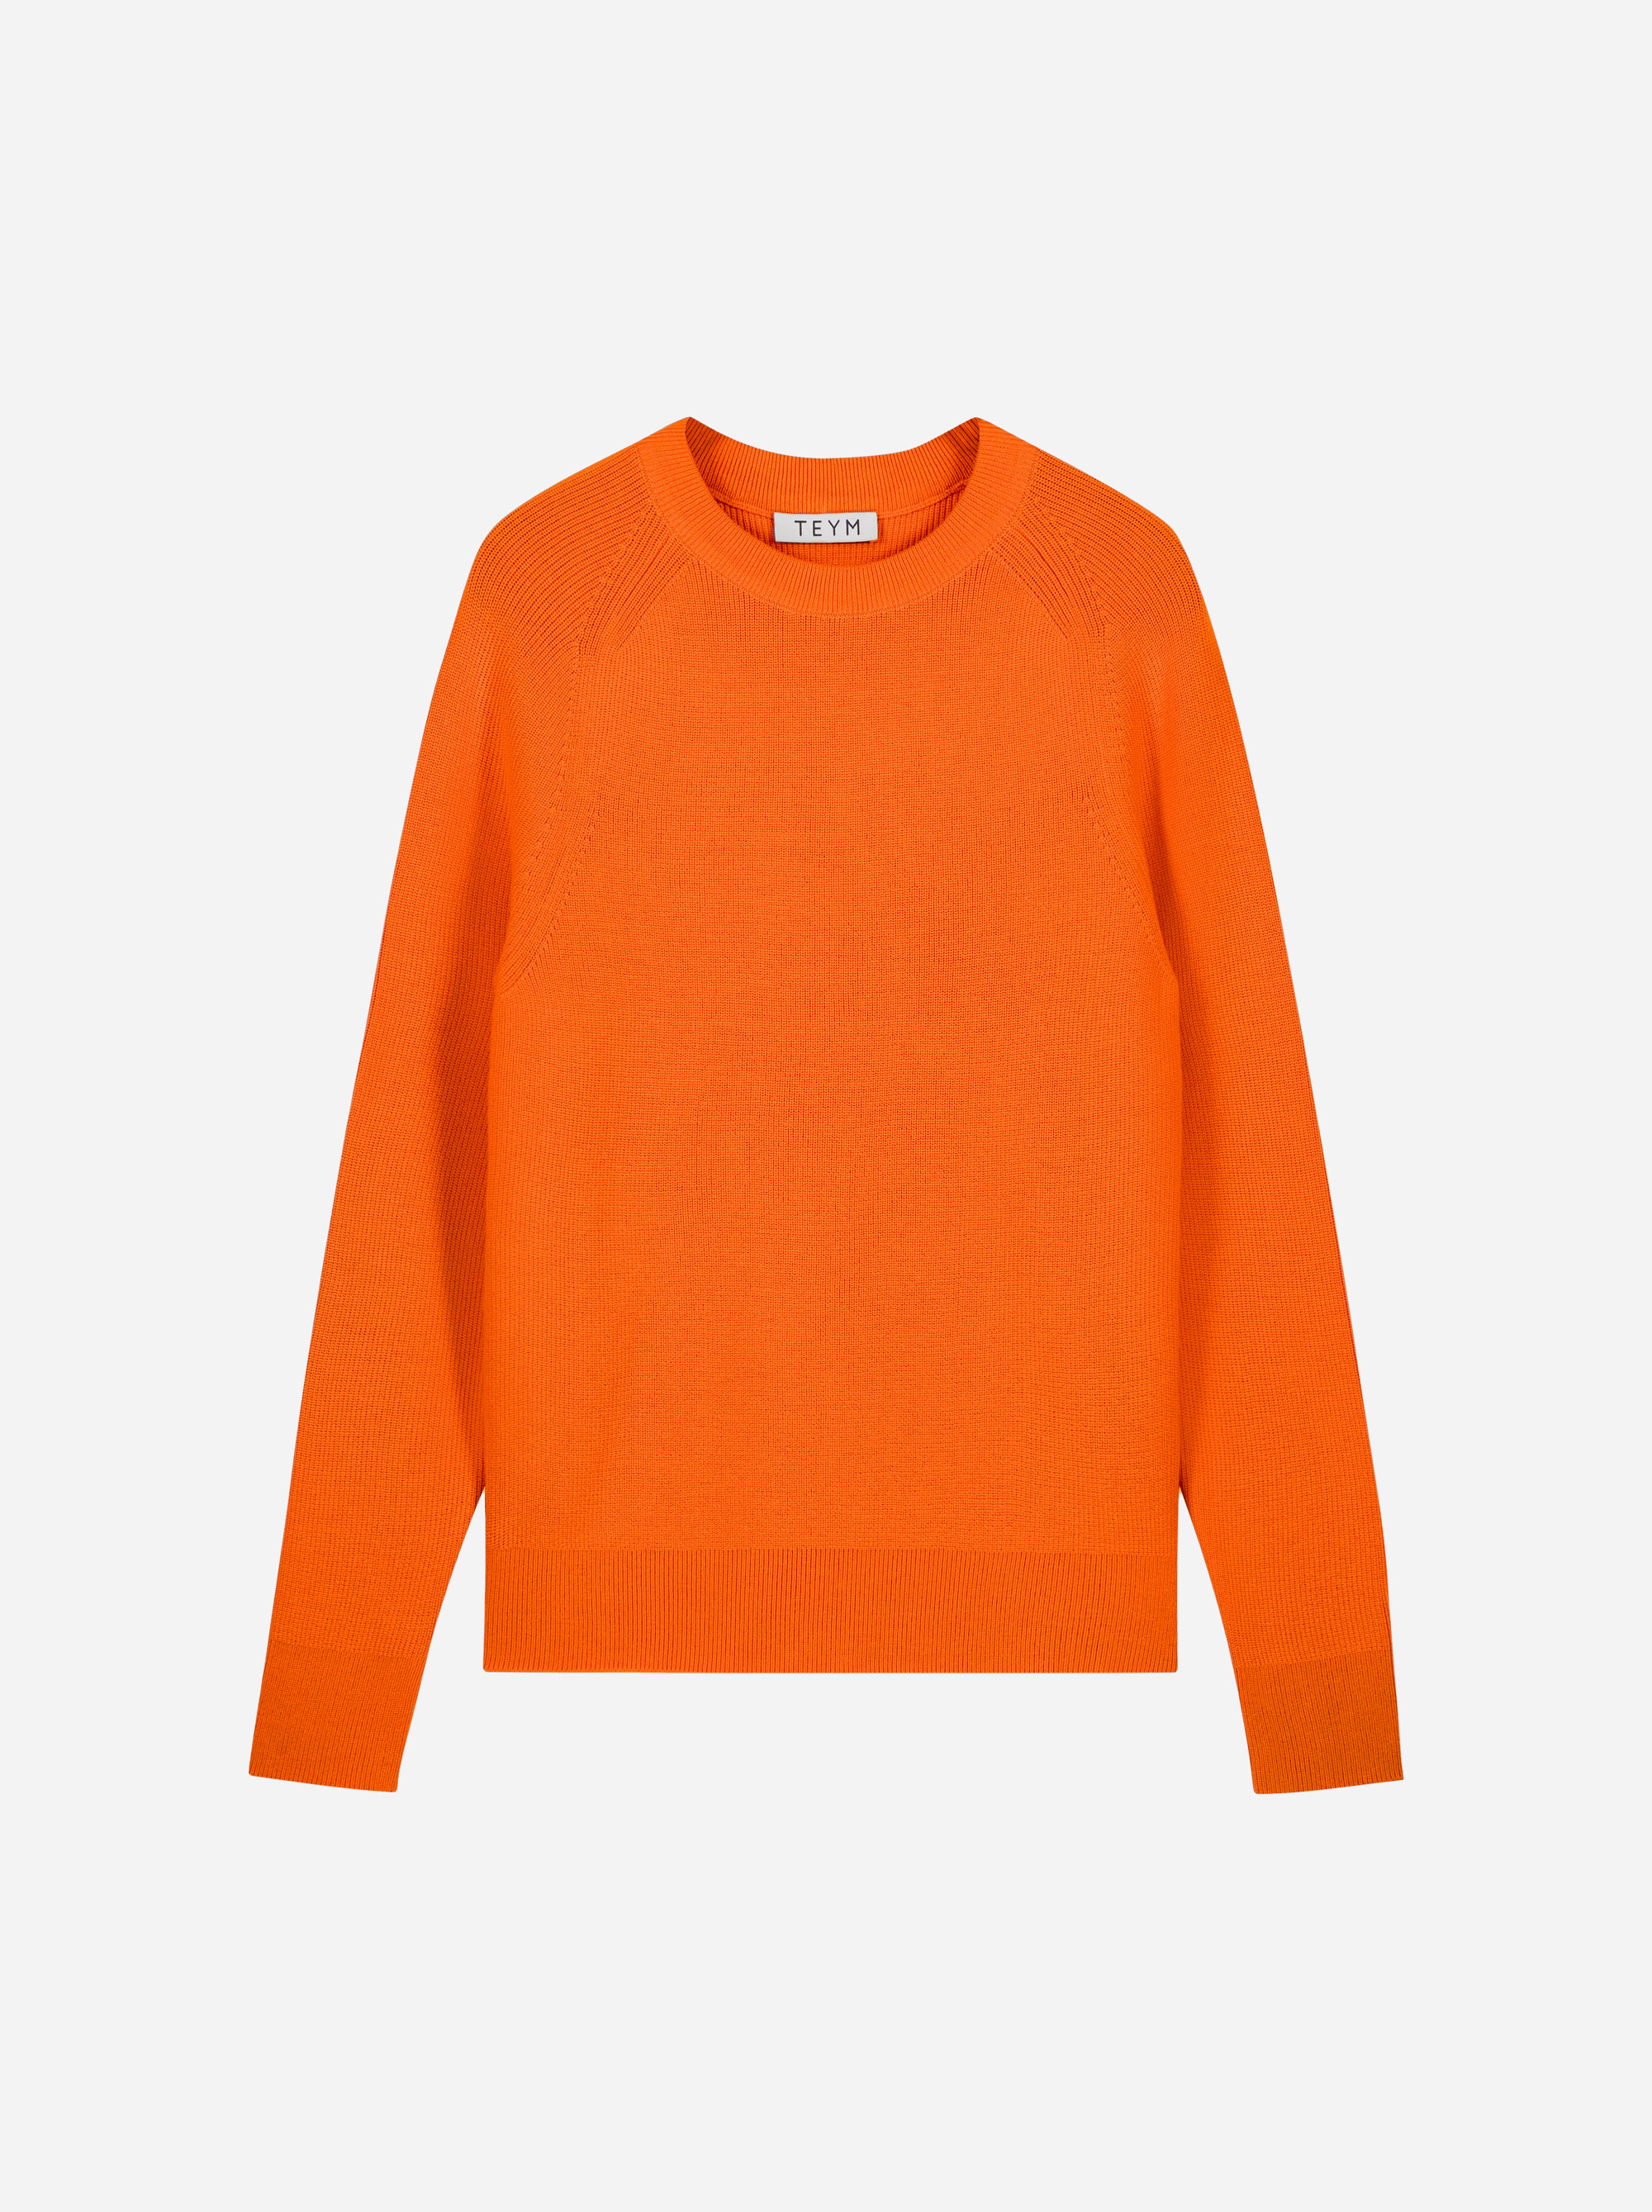 Teym - Crewneck - The Merino Sweater - Men - Orange - 3 2